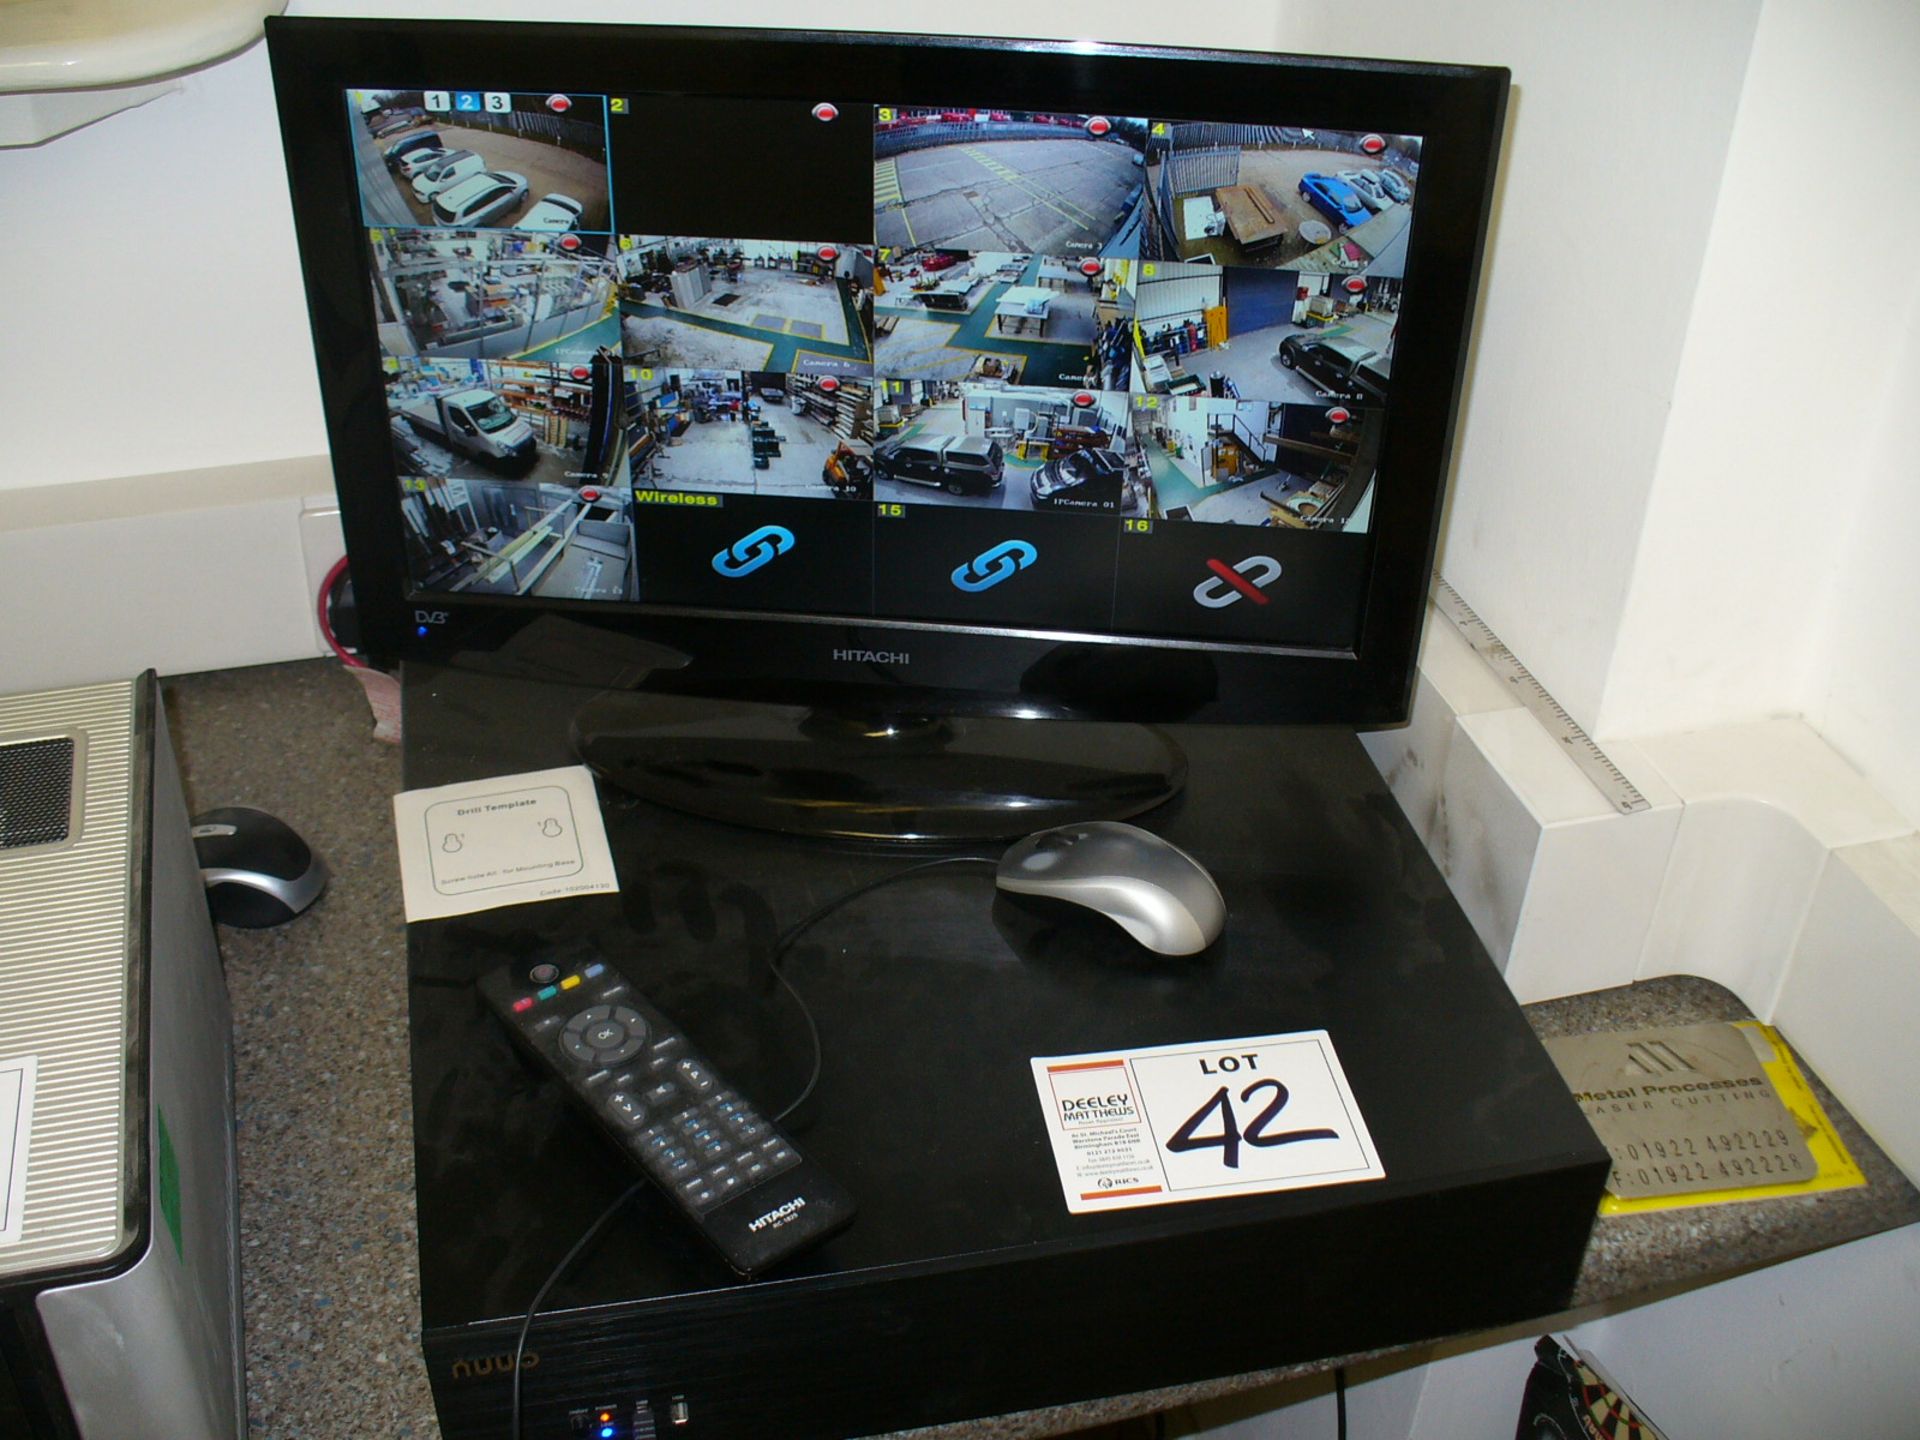 Nuuo colour CCTV SYSTEM, 13 cameras, control/recording unit and Hitachi monitor